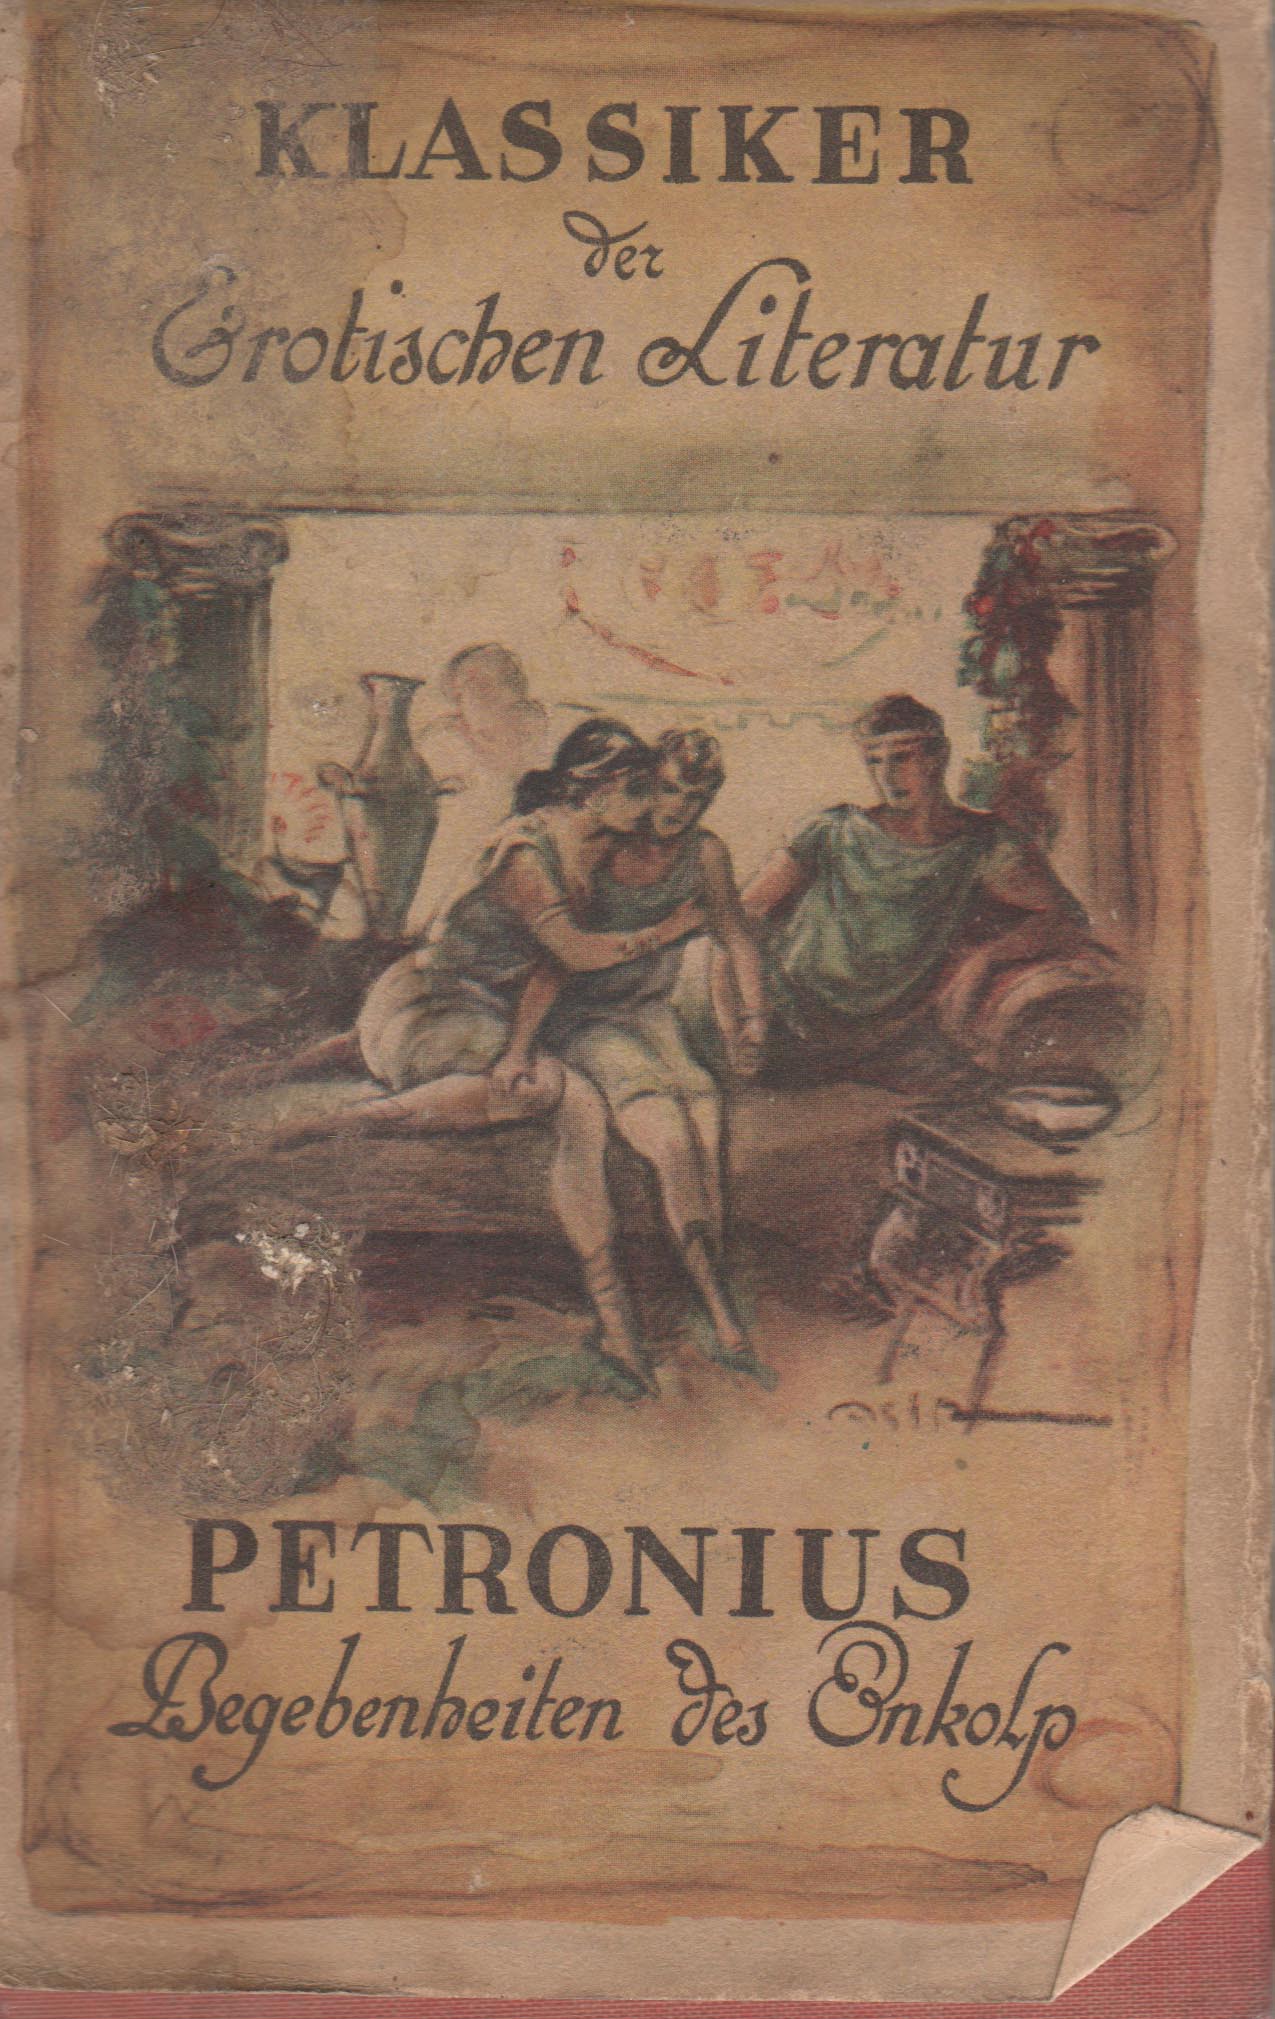 Begebenheiten des Enklop (Petronius)